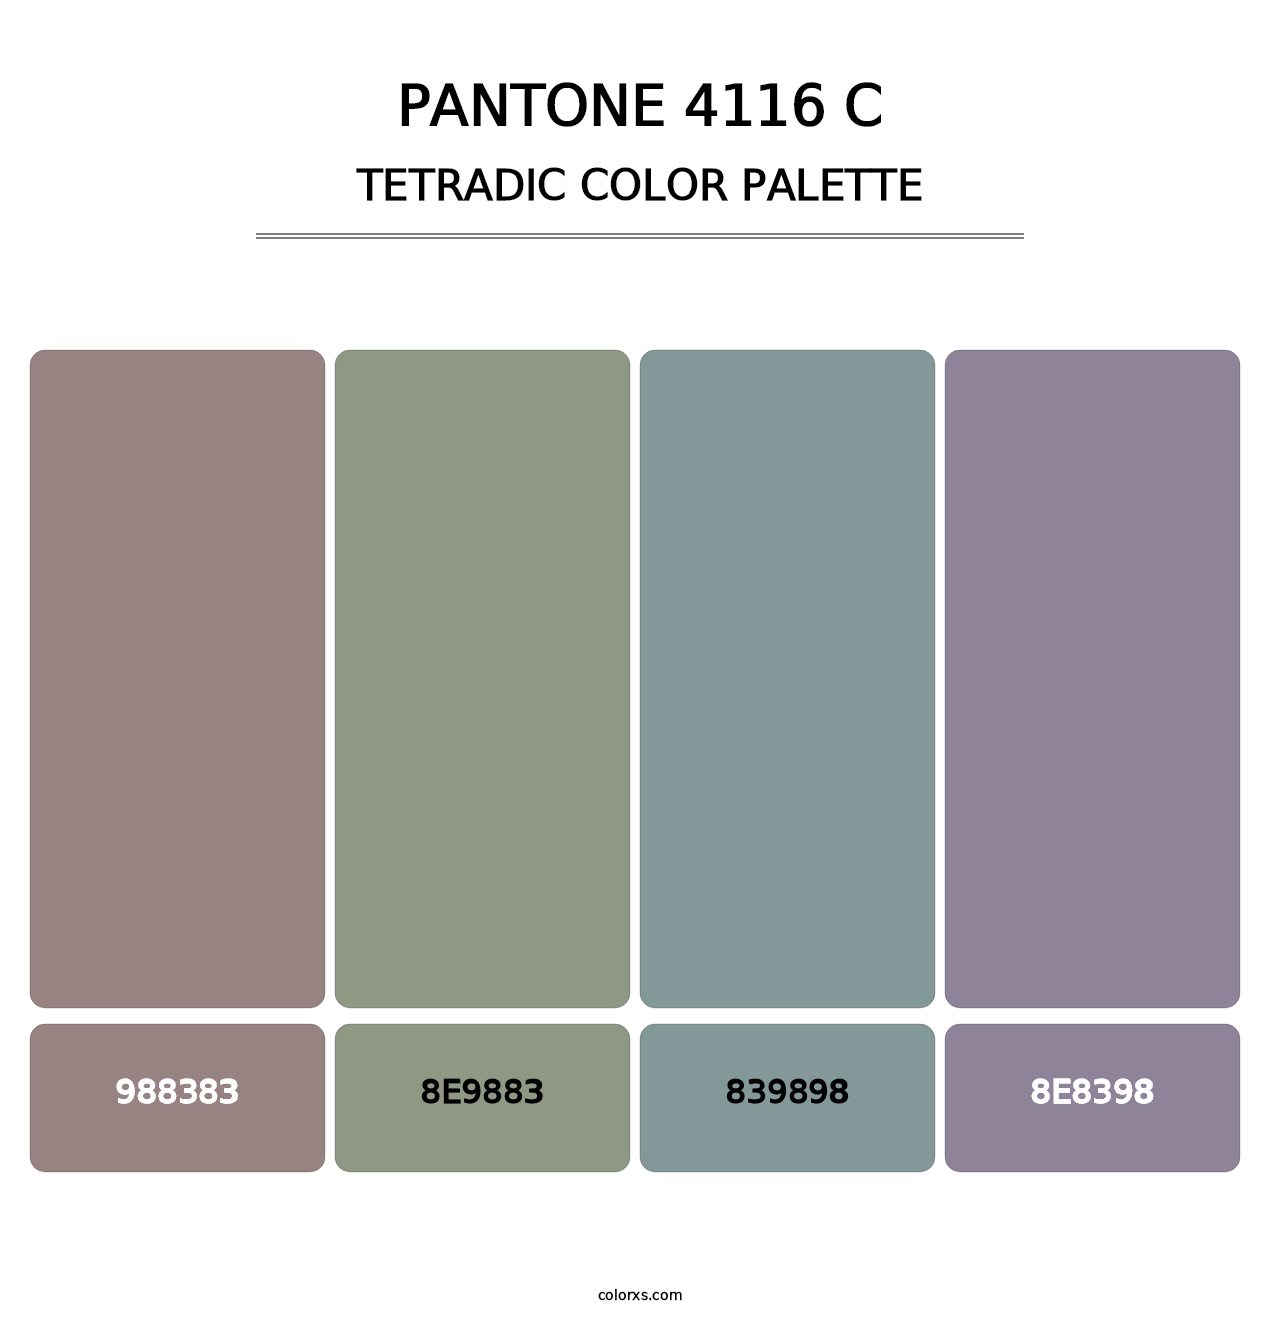 PANTONE 4116 C - Tetradic Color Palette